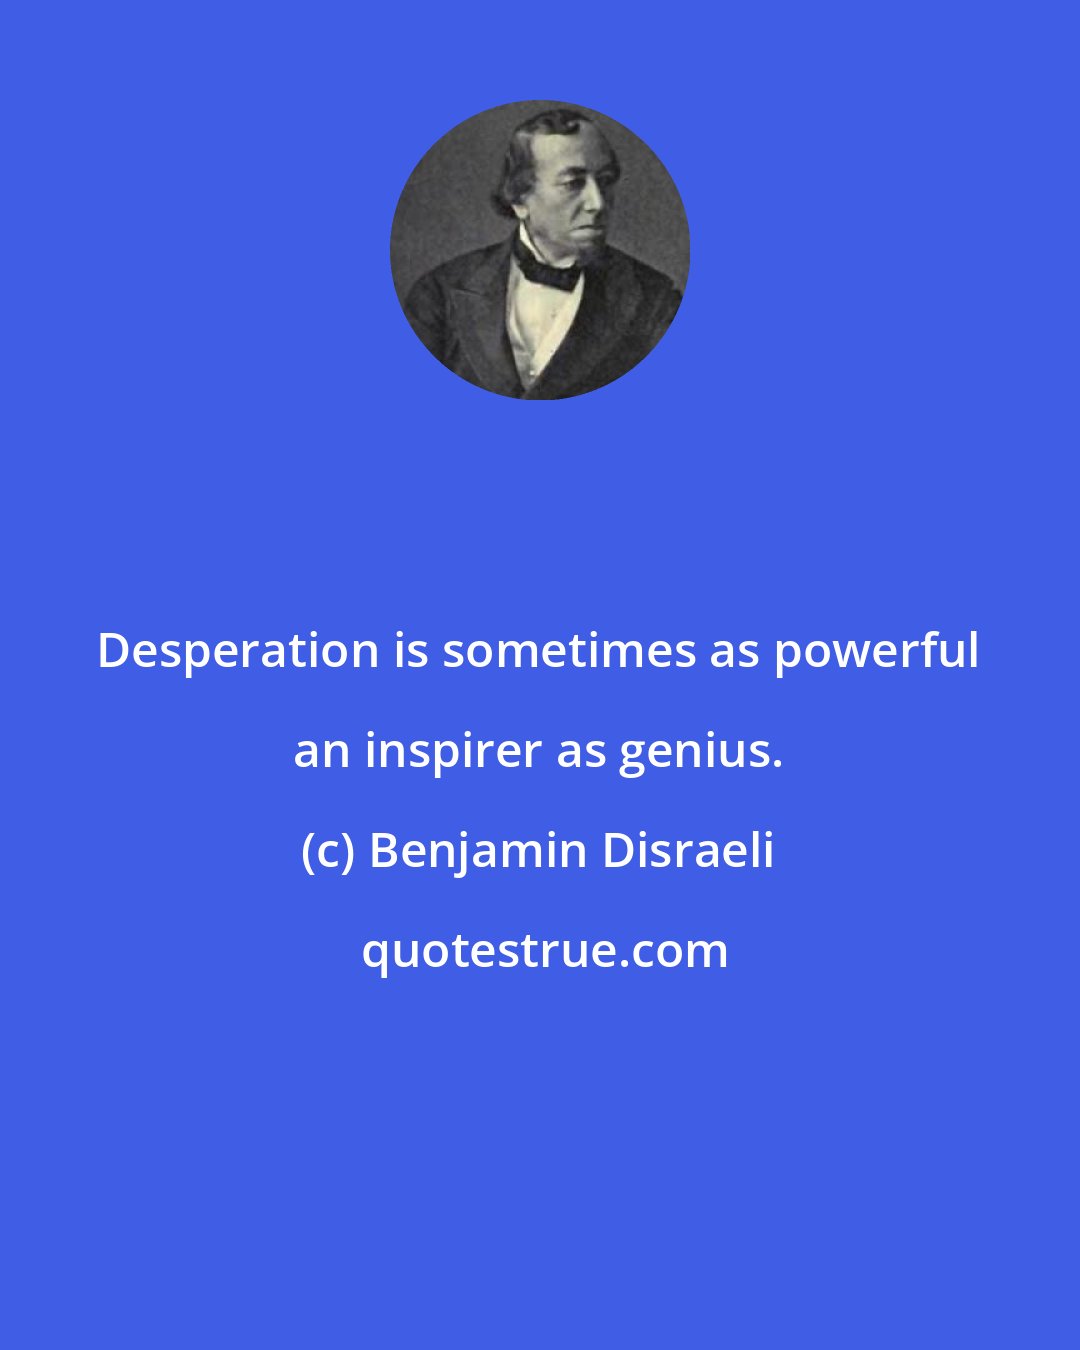 Benjamin Disraeli: Desperation is sometimes as powerful an inspirer as genius.